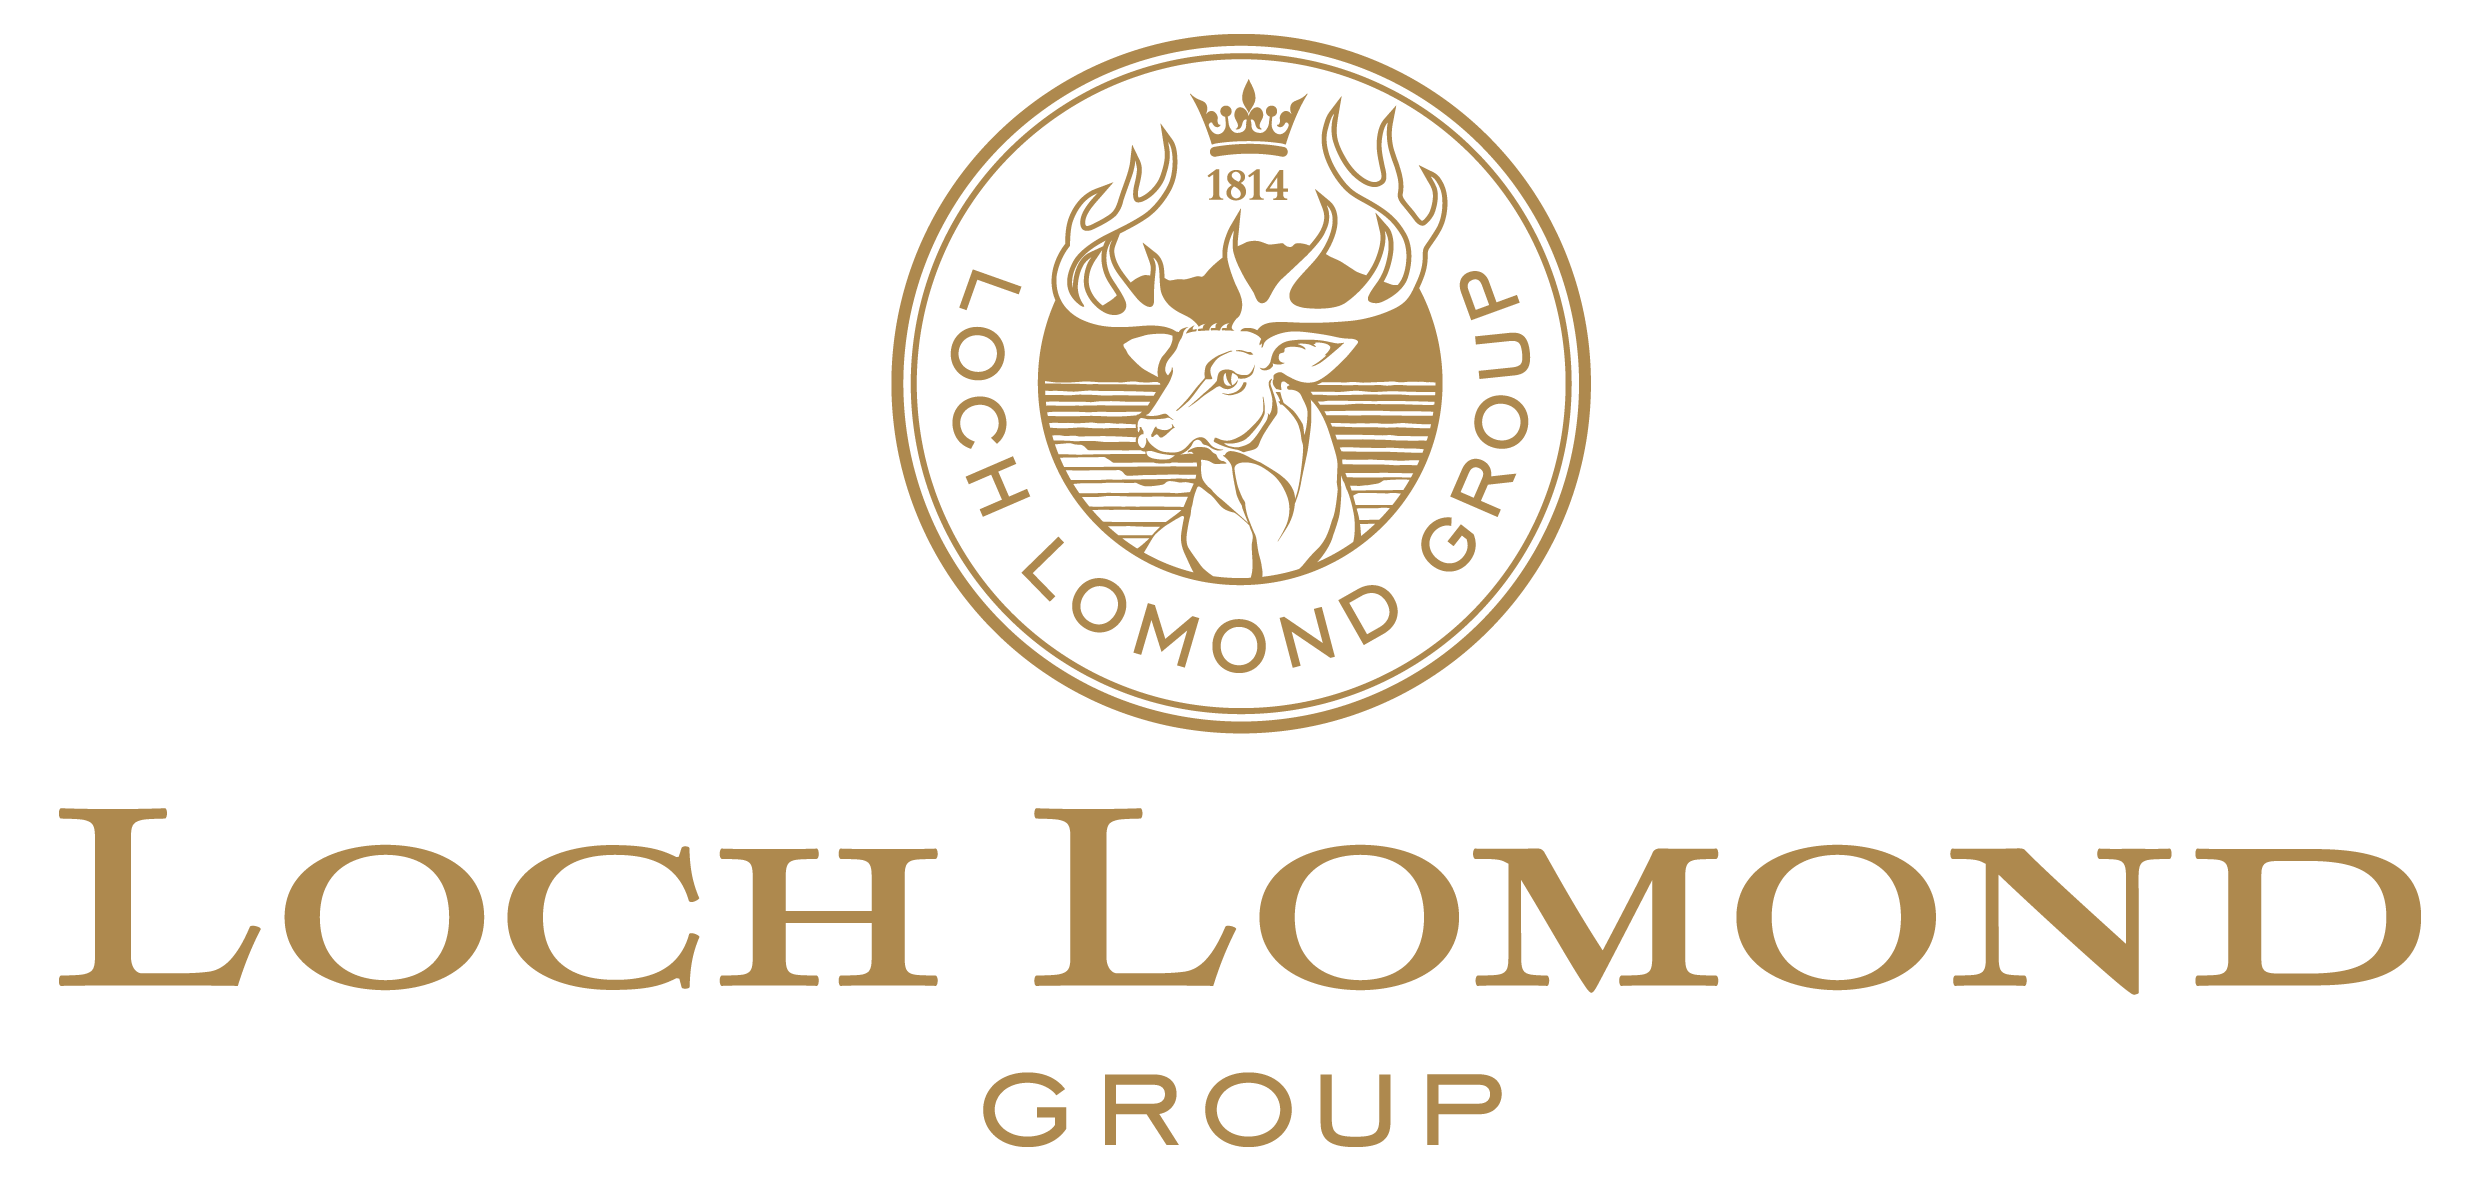 The Loch Lomond Group logo